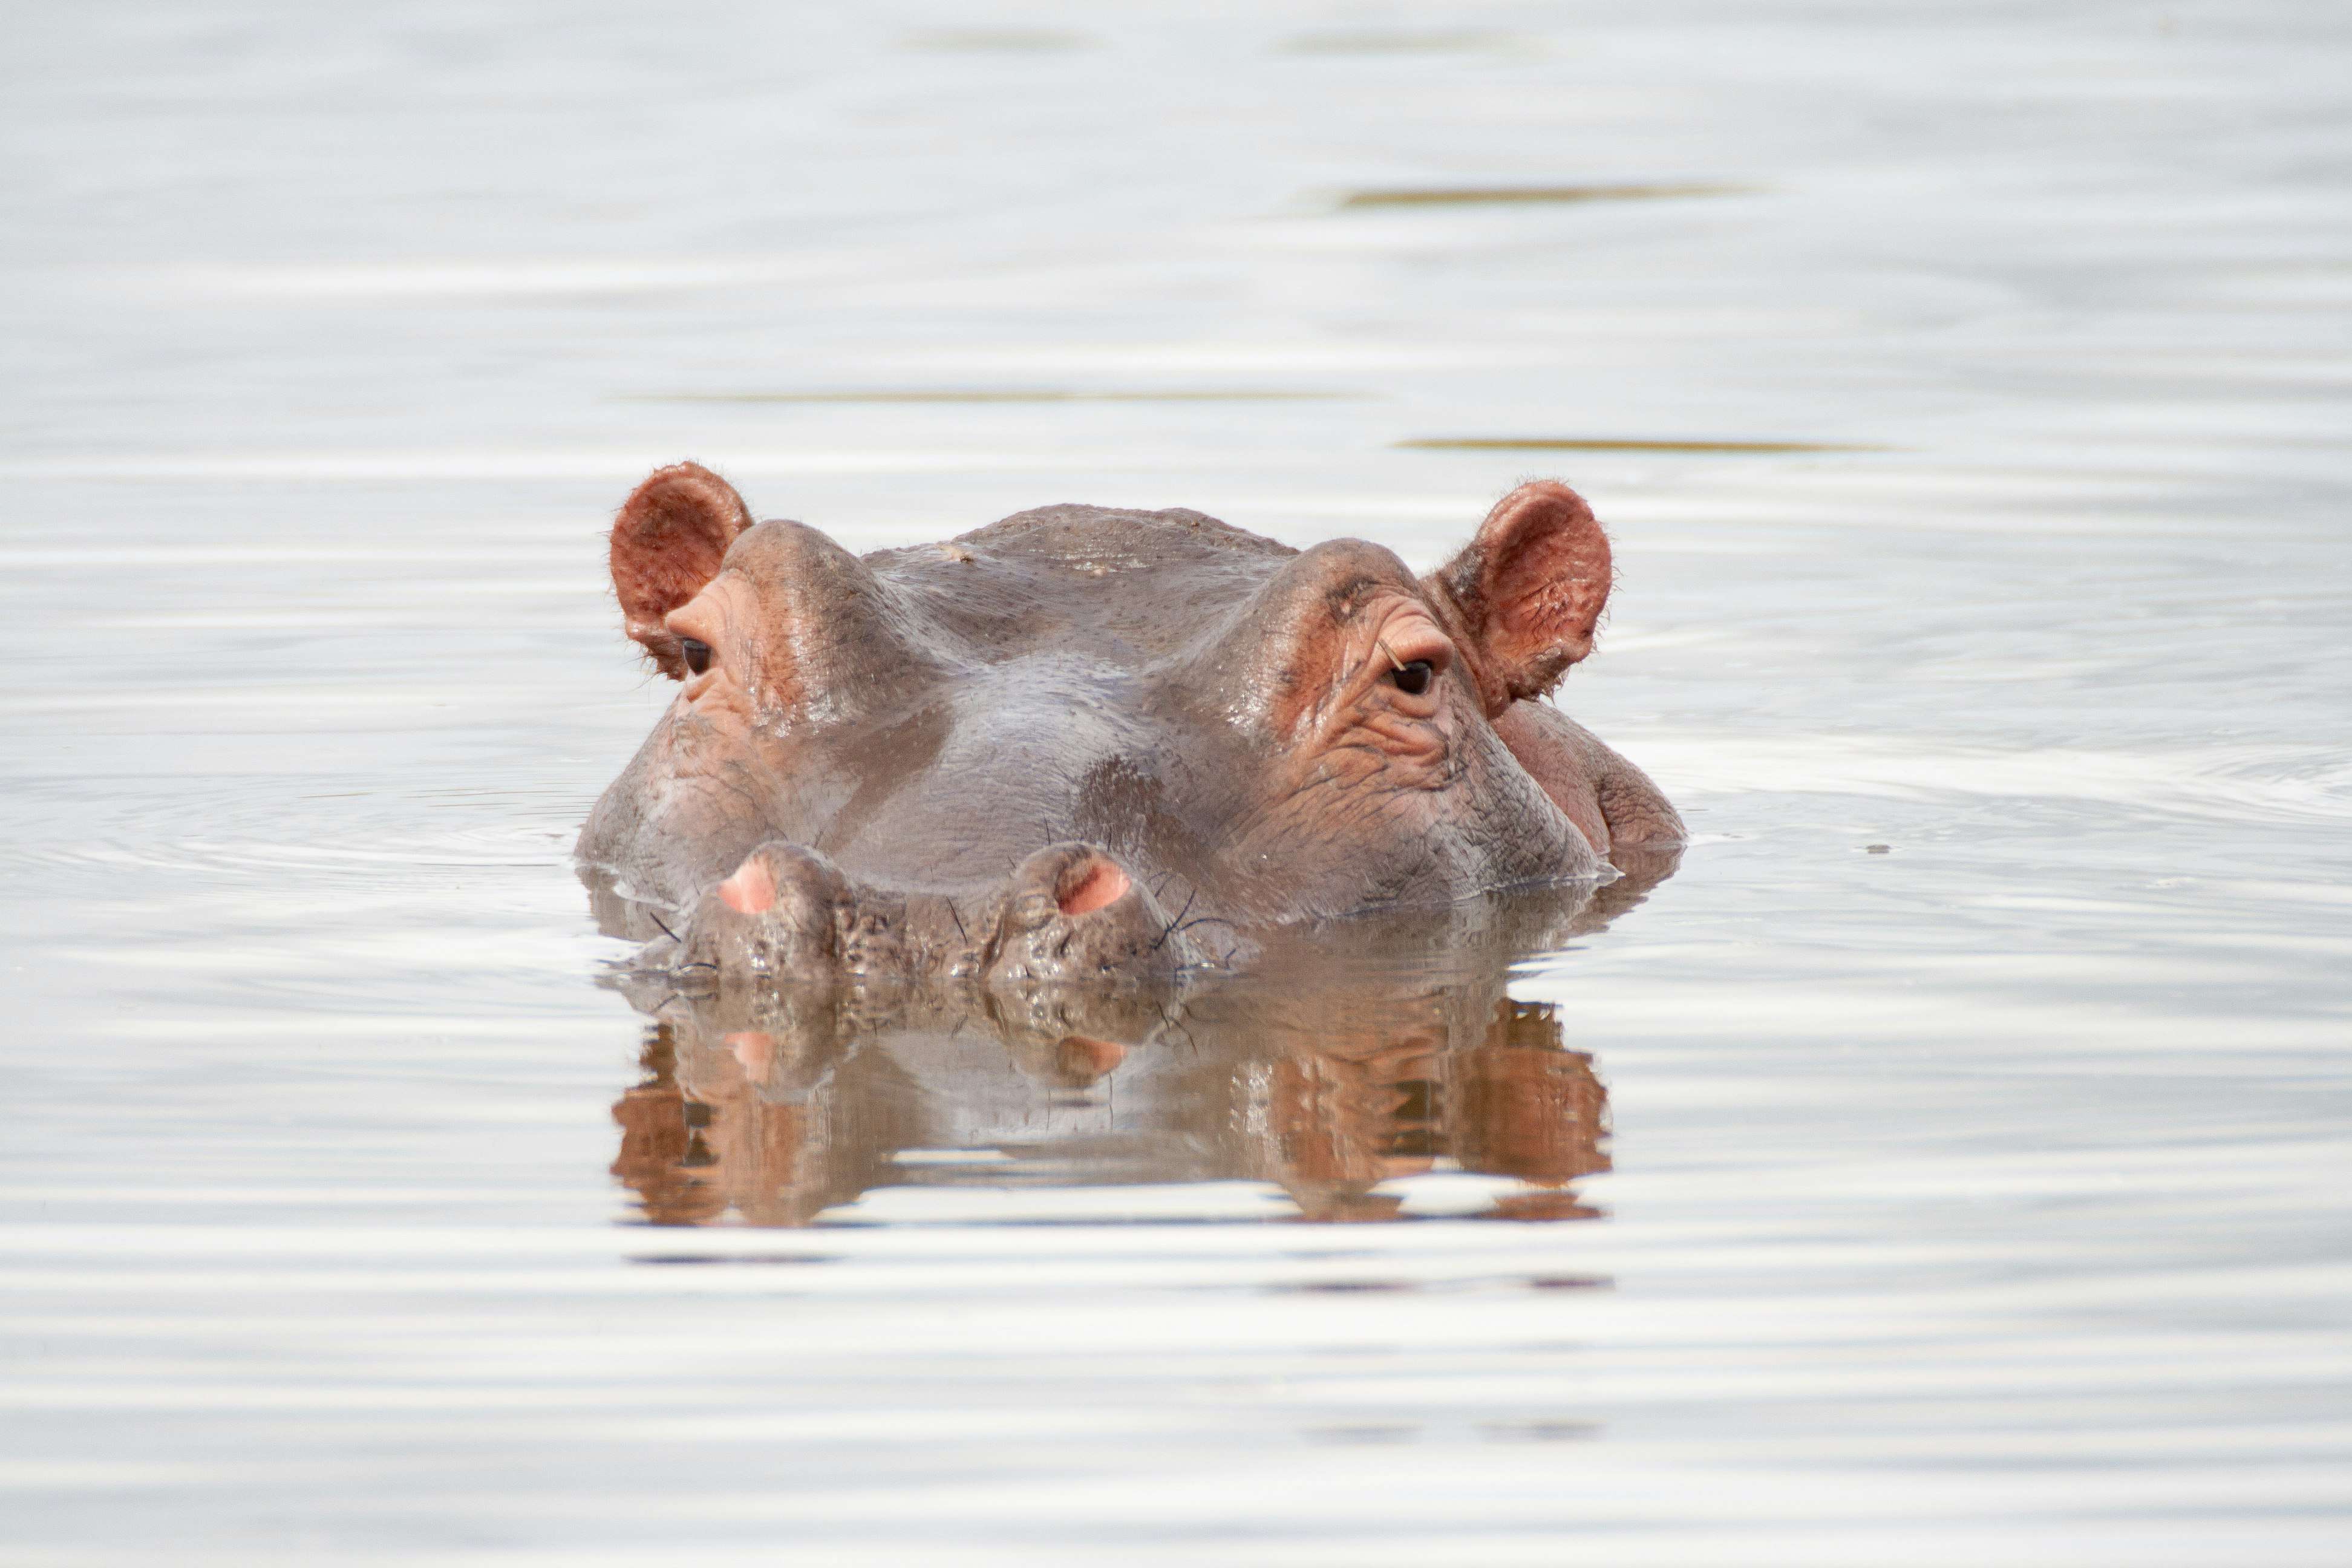 brown rhinoceros on water during daytime